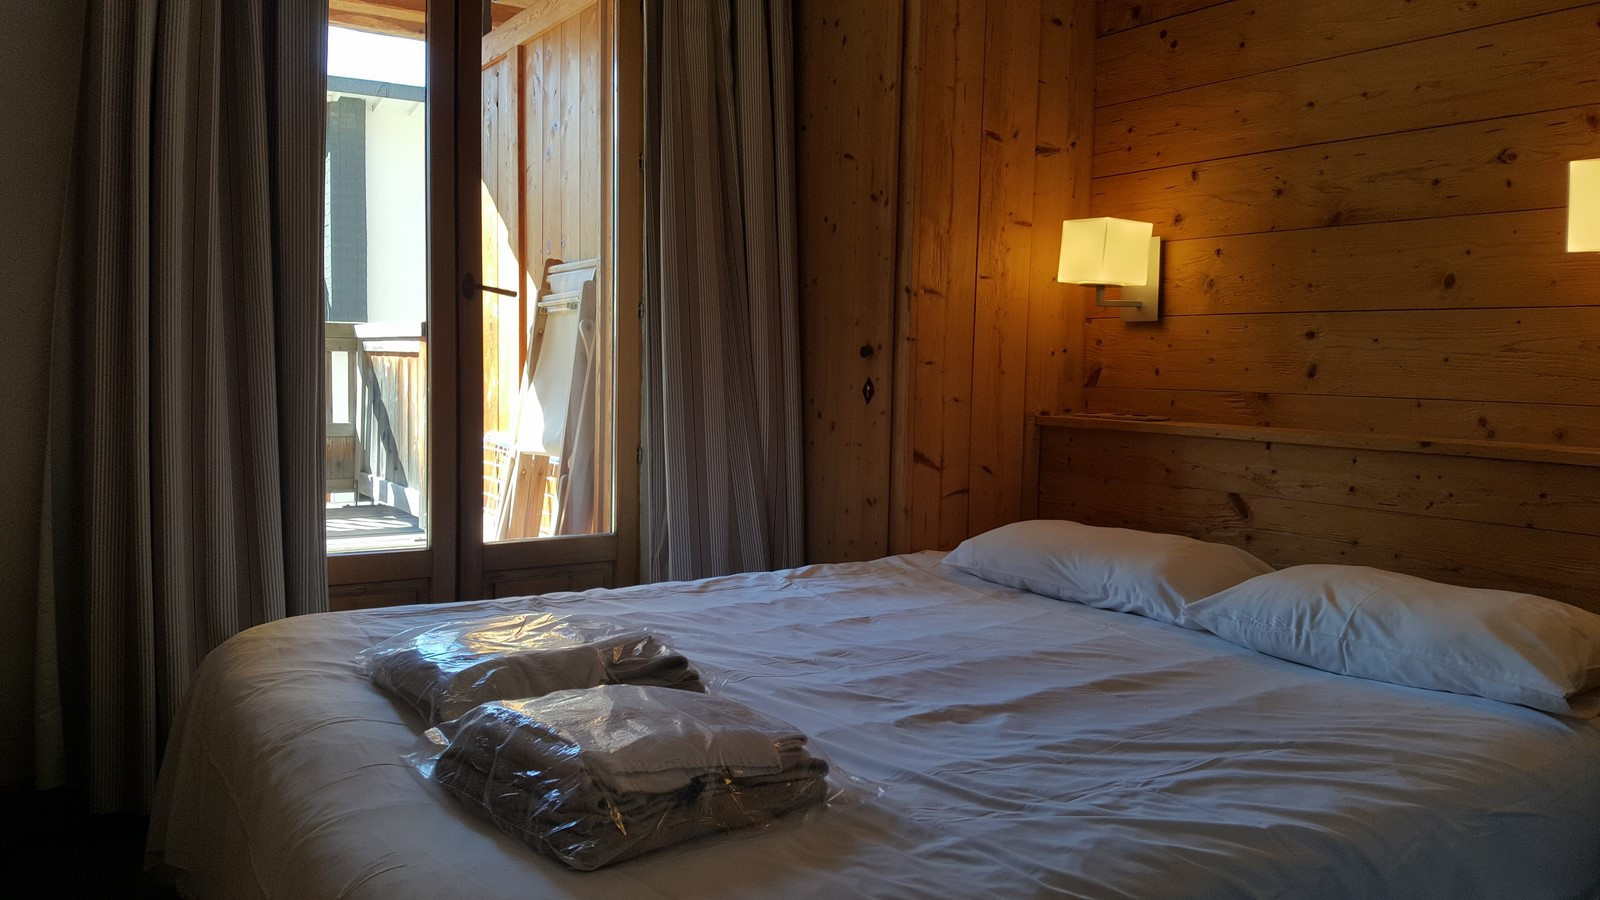 Appartement Cortina - 23 - Appt lumineux - 4 pers - Les Deux Alpes Venosc